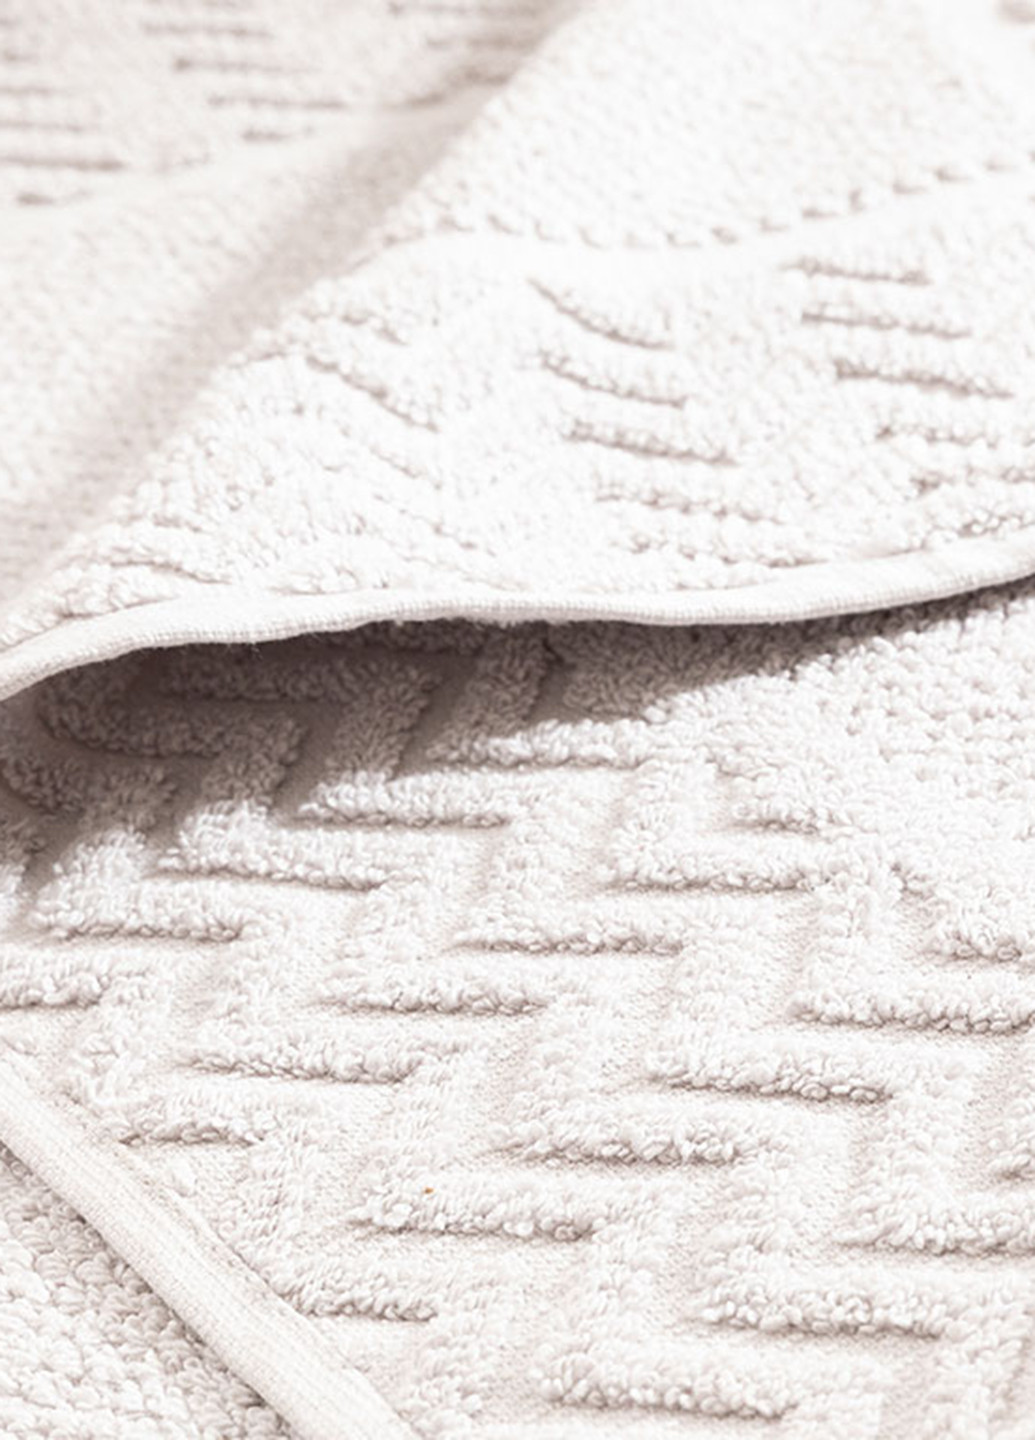 English Home полотенце для ног, 50х70 см однотонный светло-серый производство - Турция